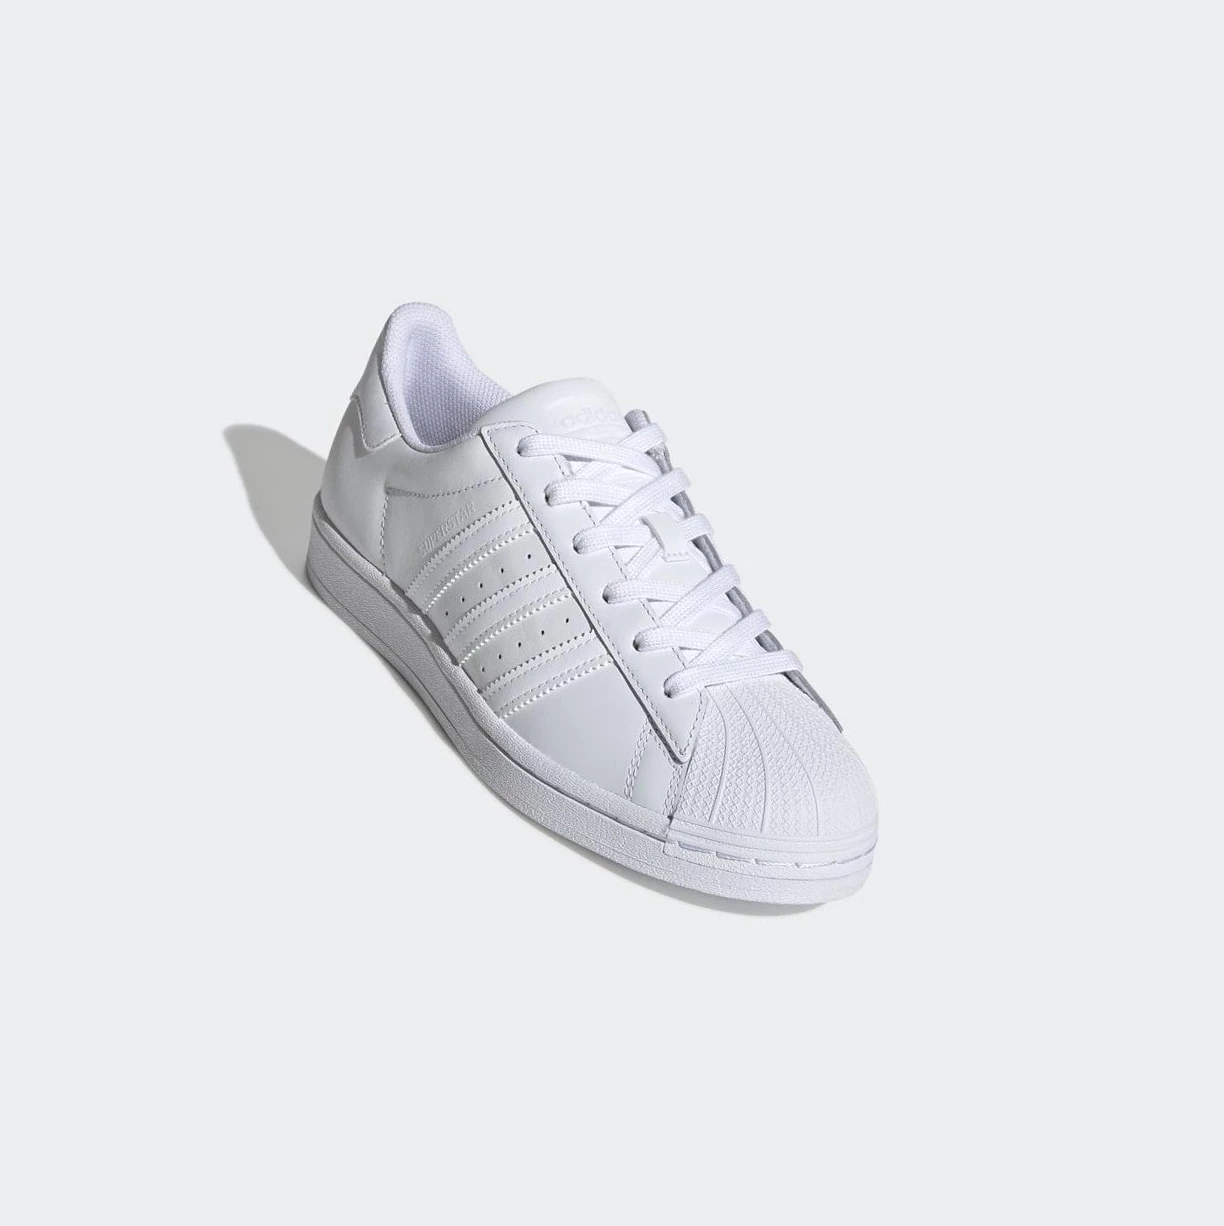 Originálne Topánky Adidas Superstar Damske Biele | 740SKMDVKWP